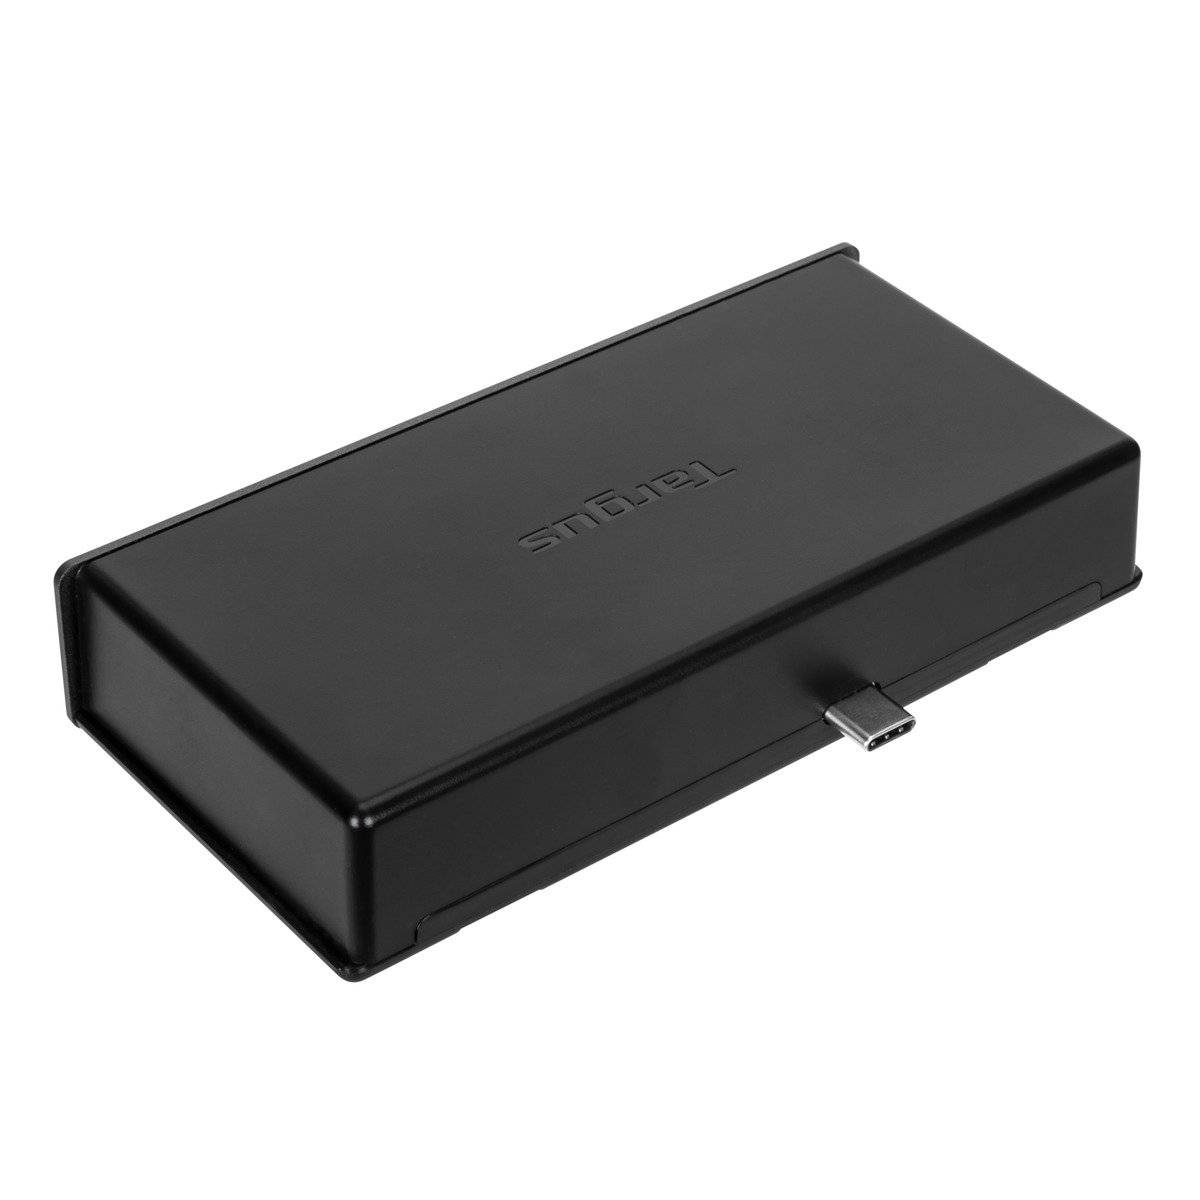 Rca Informatique - image du produit : HDMI MODULAR DOCK HUB BLK BLACK ABS